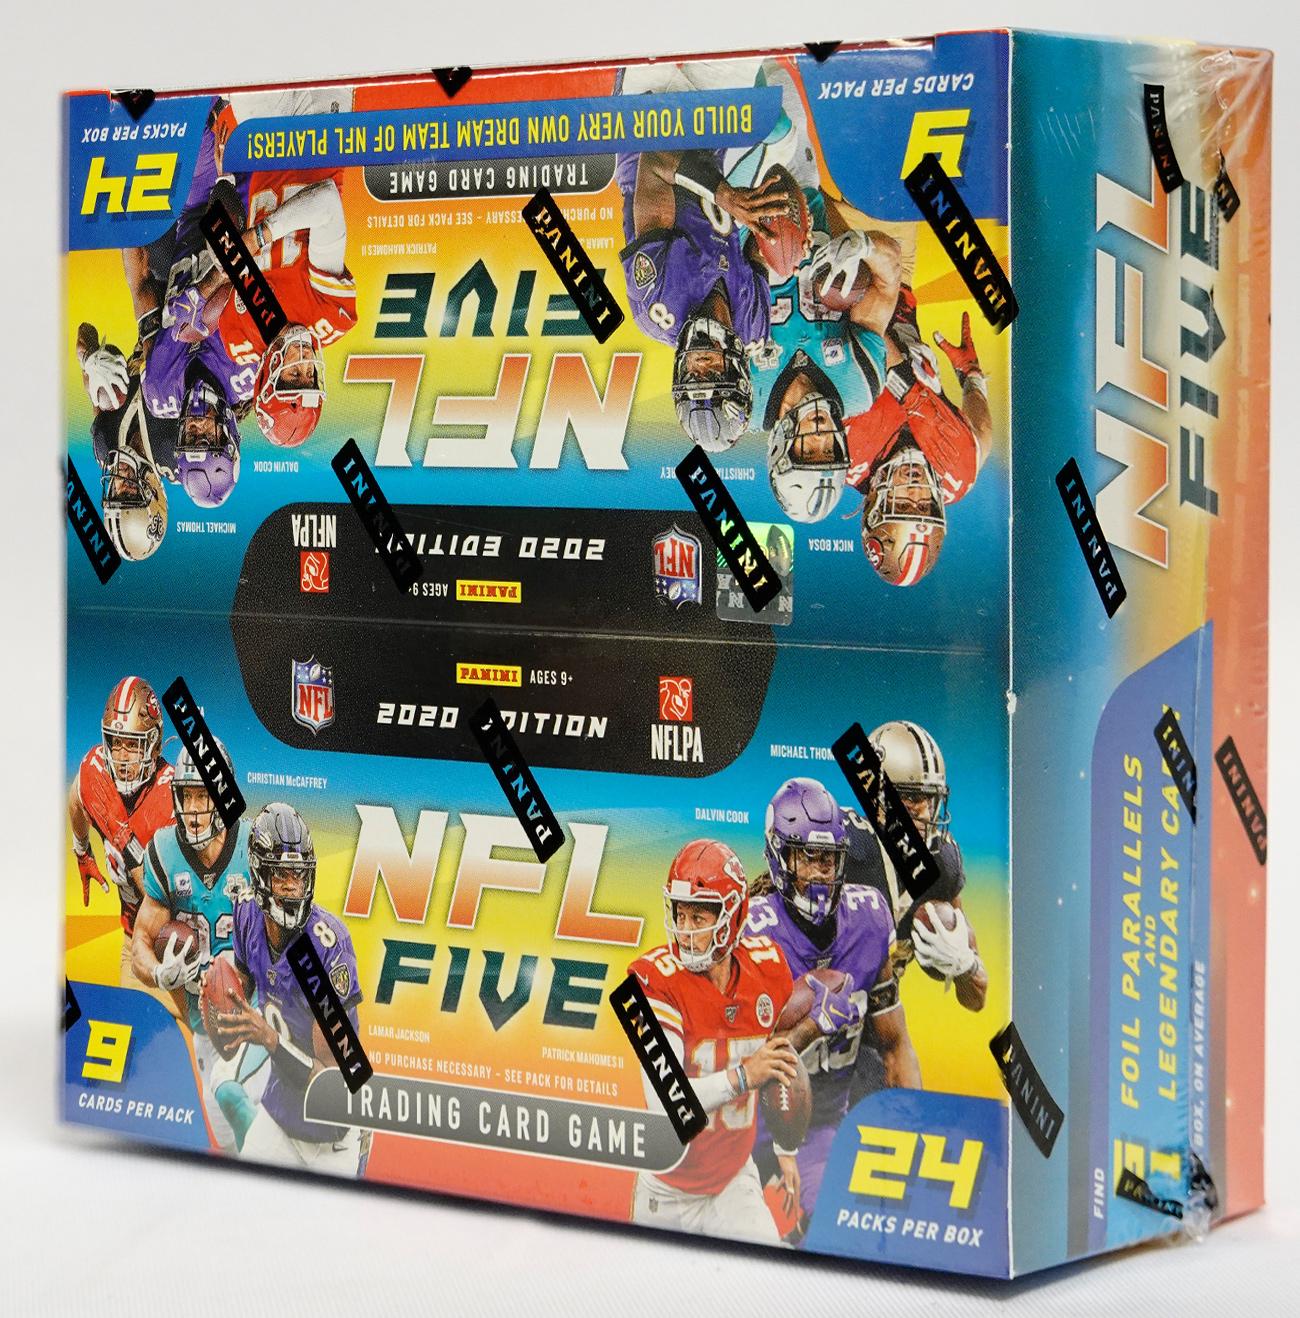 2020-panini-nfl-five-football-trading-card-game-booster-box-da-card-world